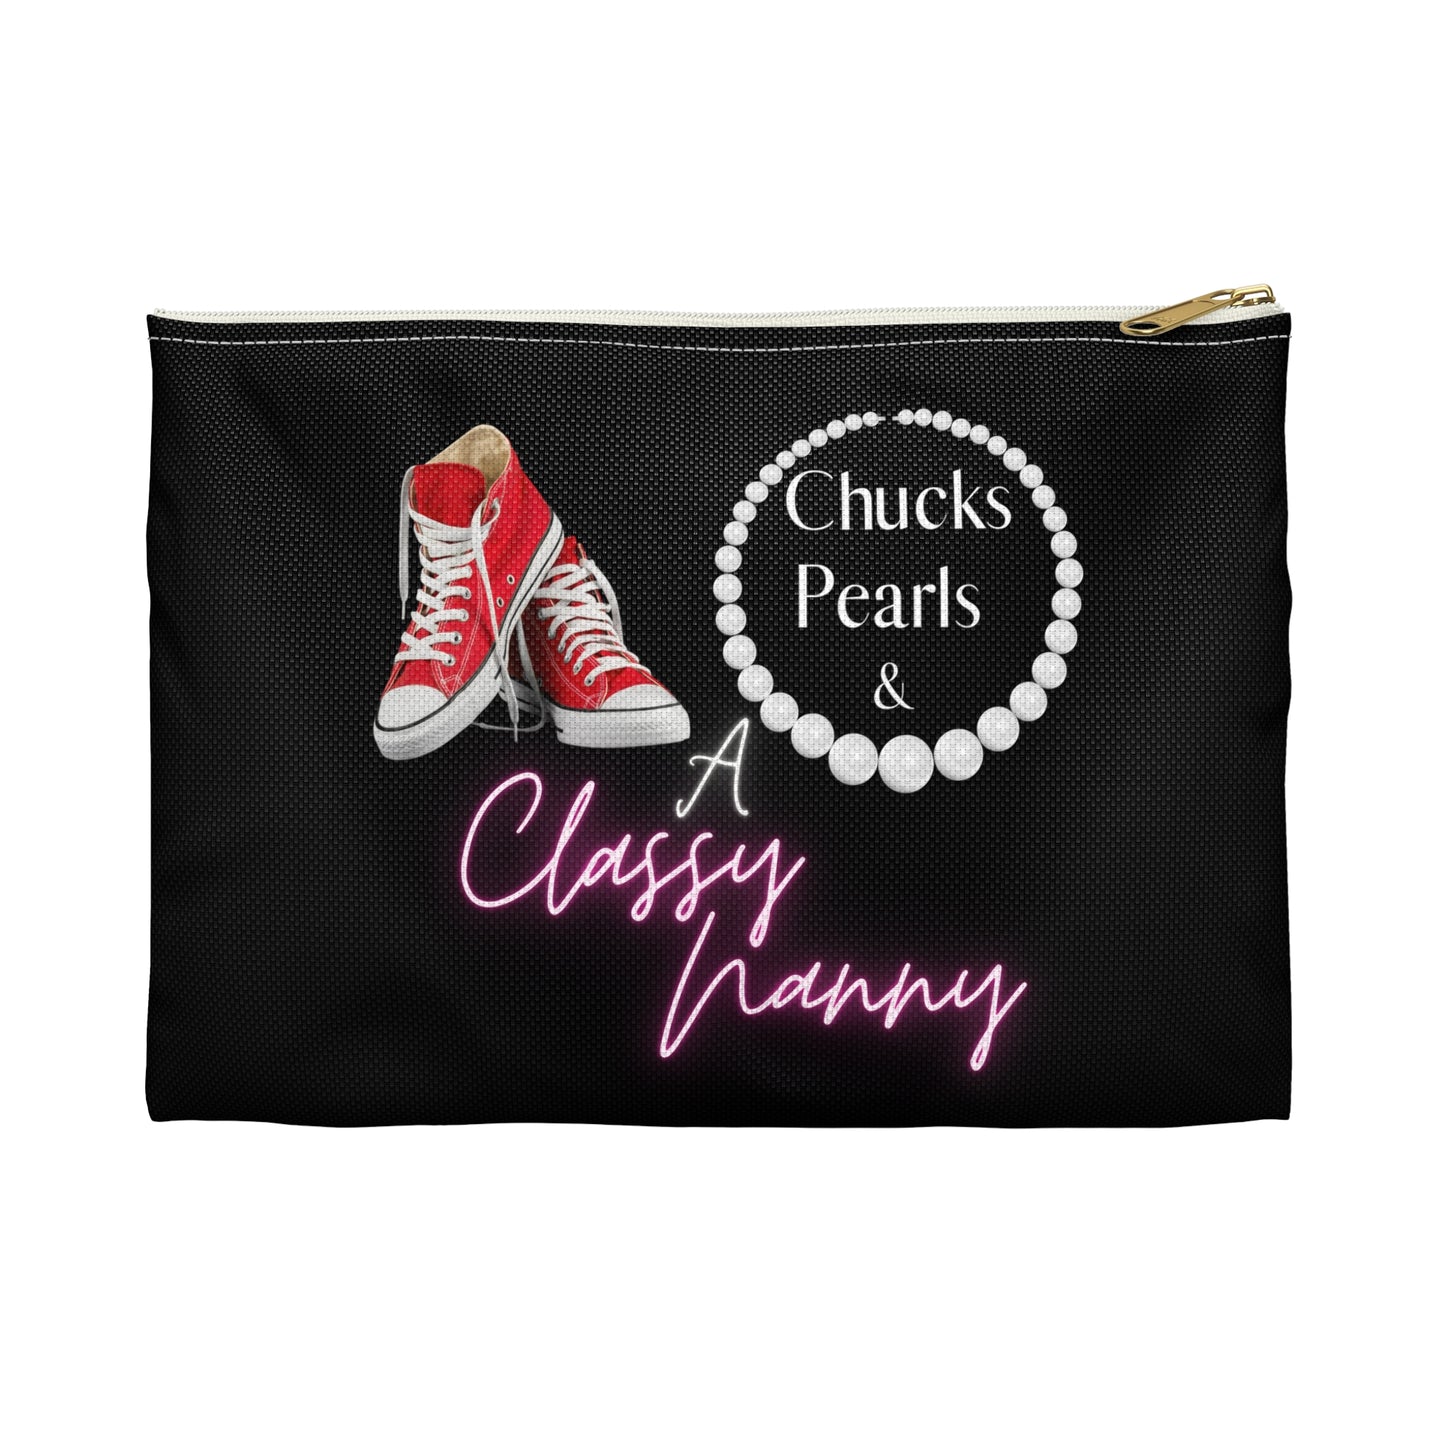 "Chucks, Pearls, and a Classy Nanny" Accessory Pouch